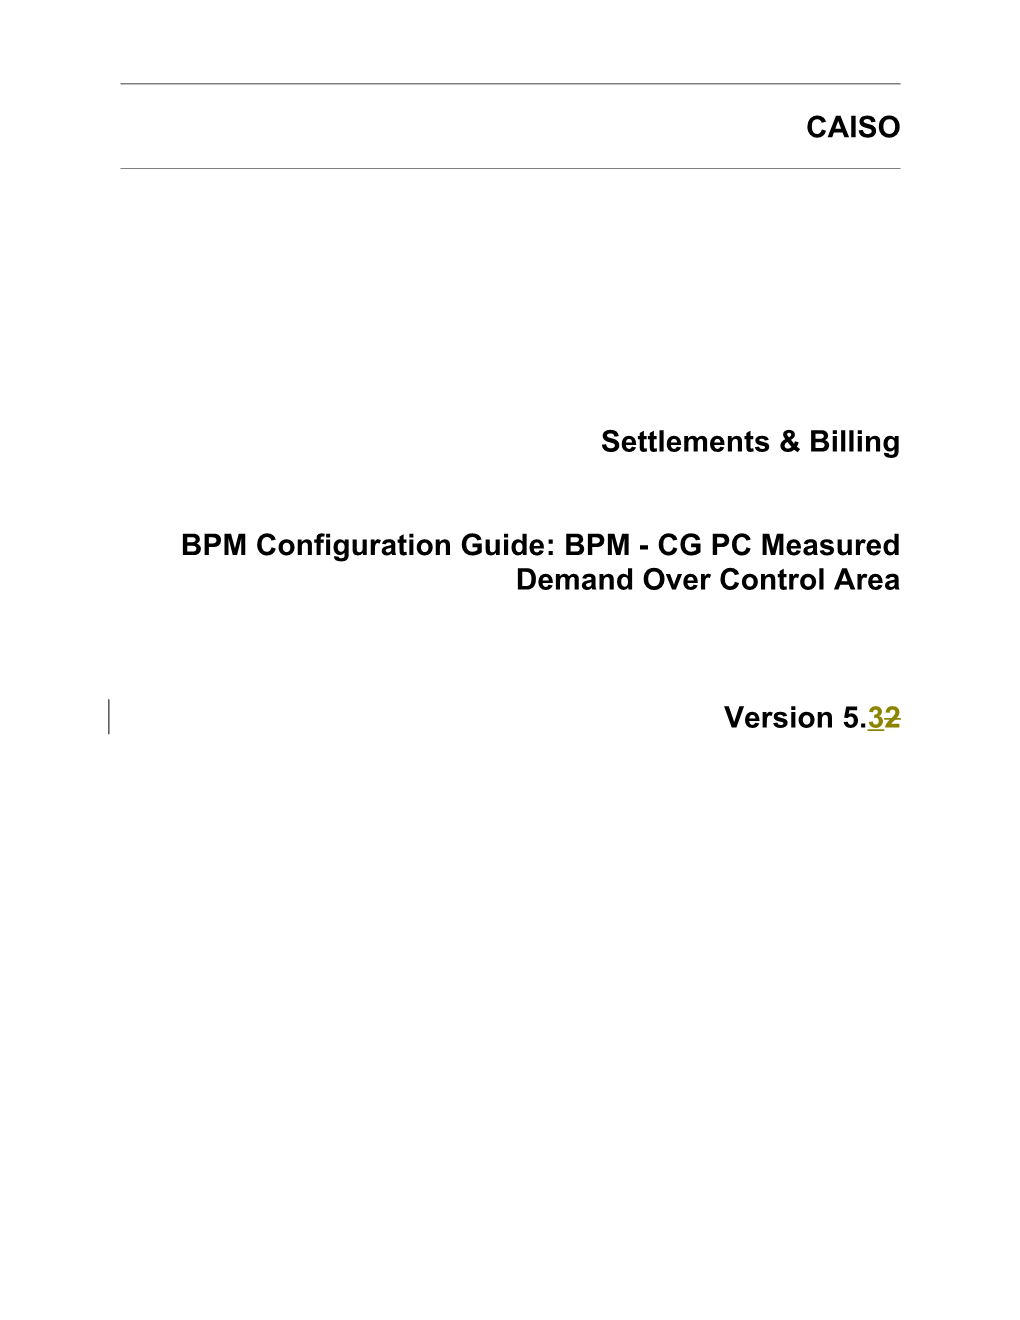 BPM - CG PC Measured Demand Over Control Area